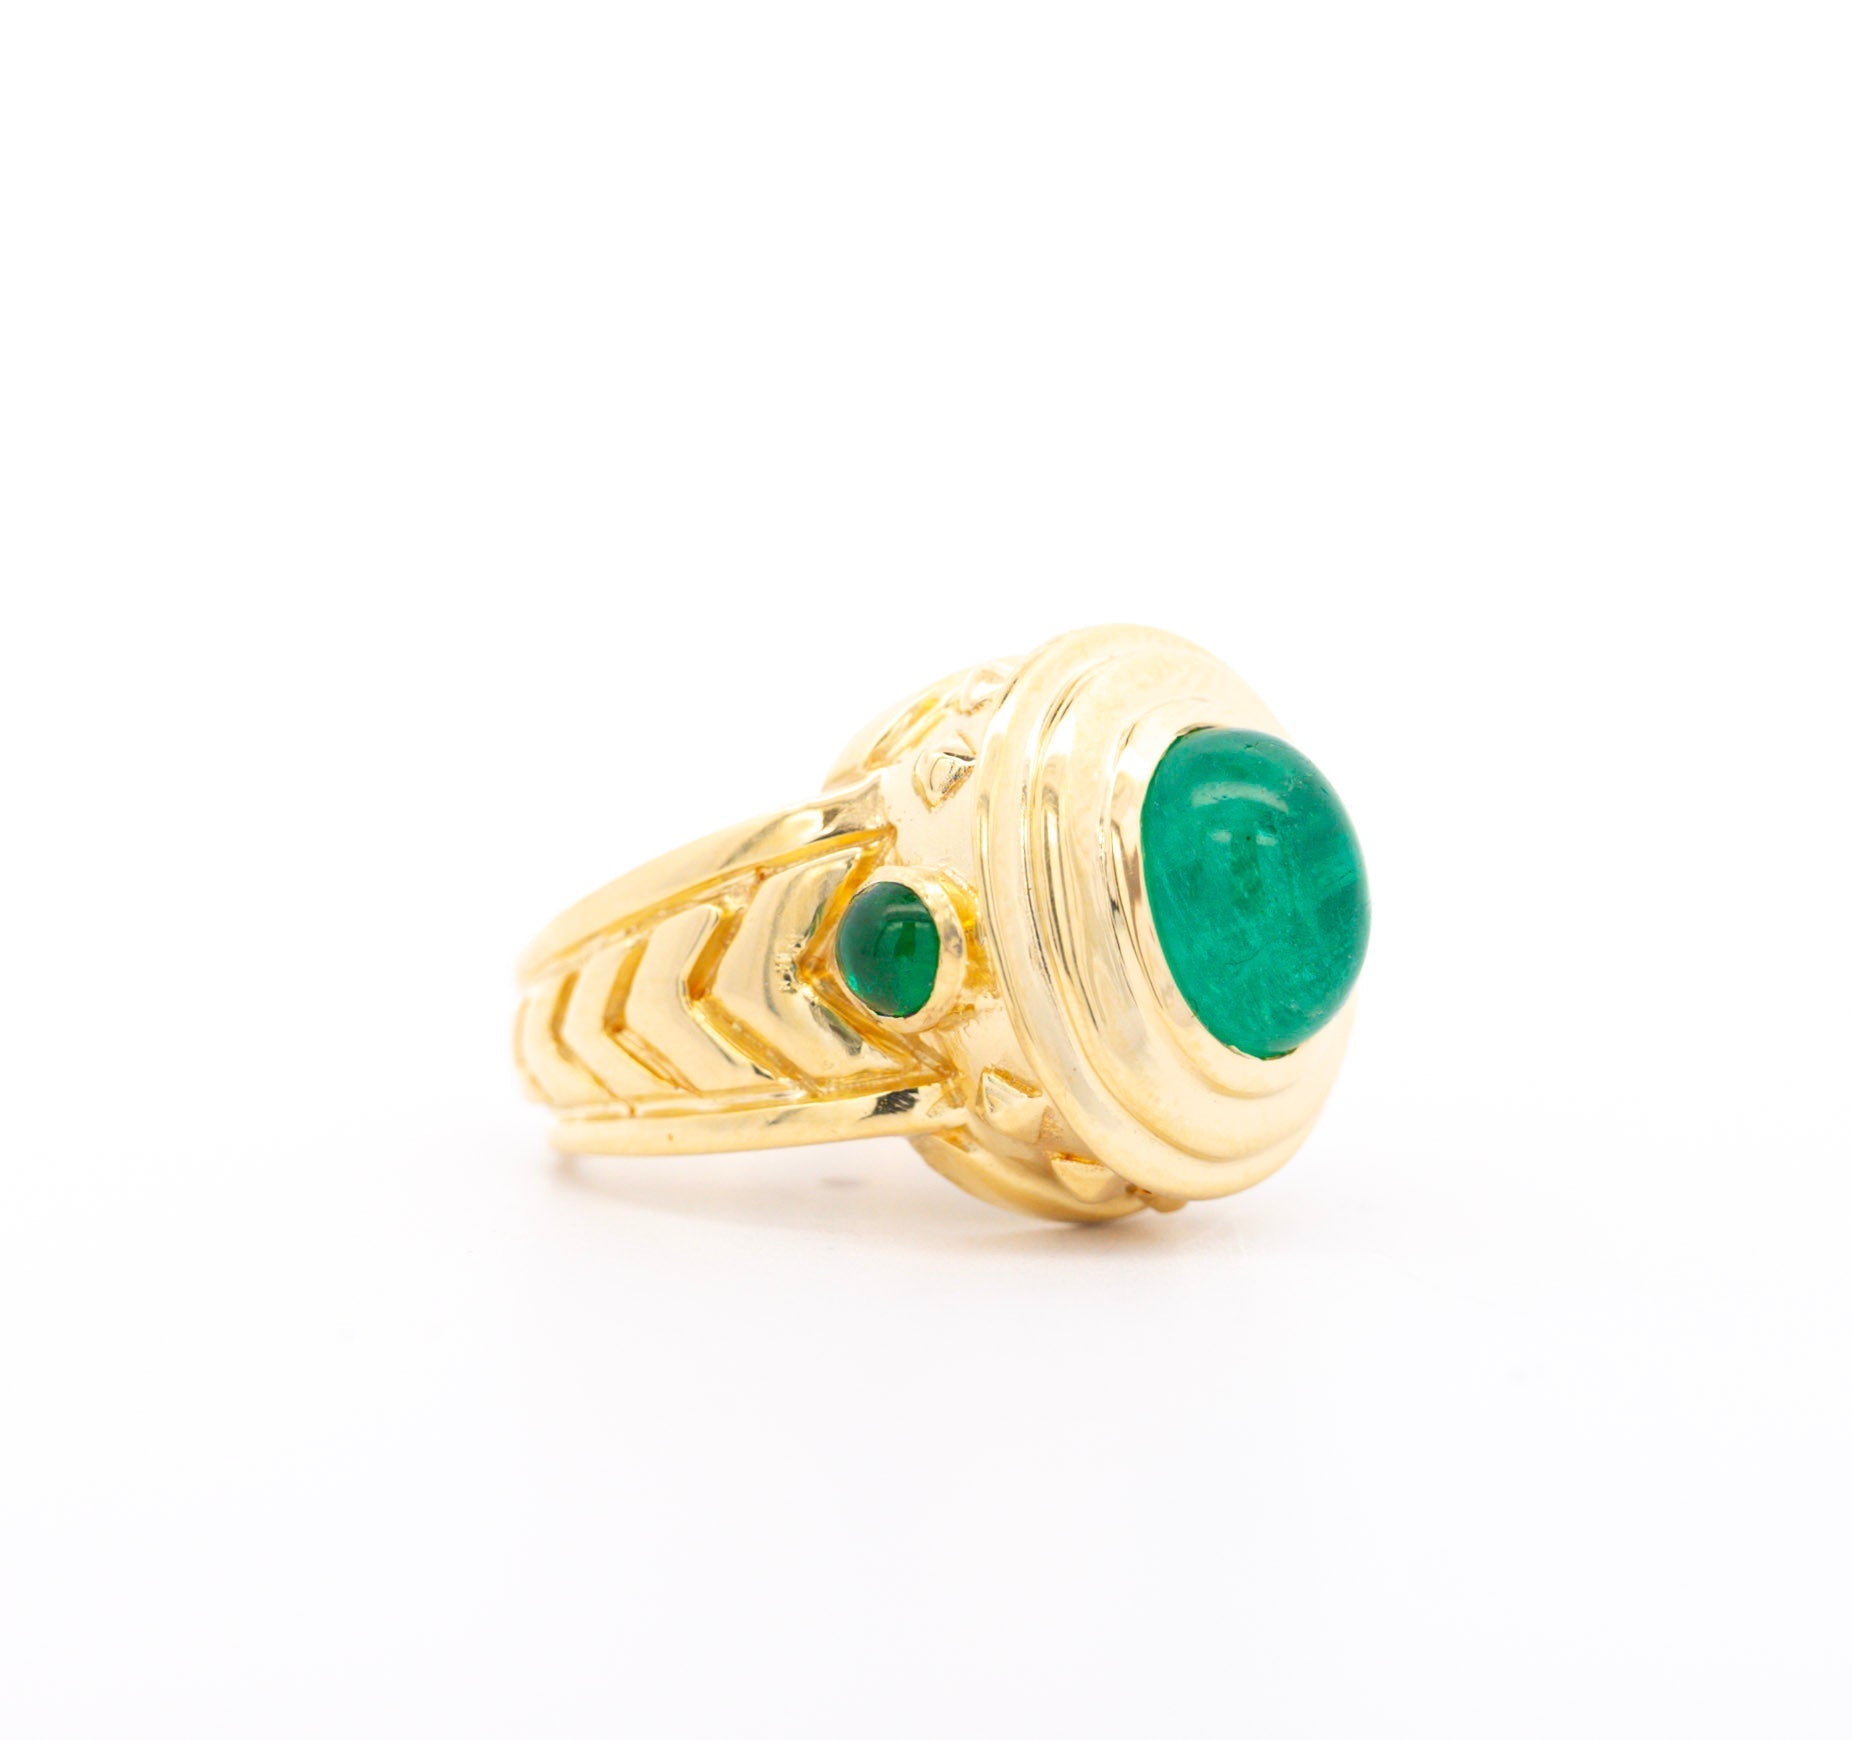 Vintage-3-Carat-Cabochon-Cut-Colombian-Emerald-Bezel-in-20K-Yellow-Gold-Ring-Rings-2_8cba6737-2fe9-4f59-a5c4-1331dd805a77.jpg